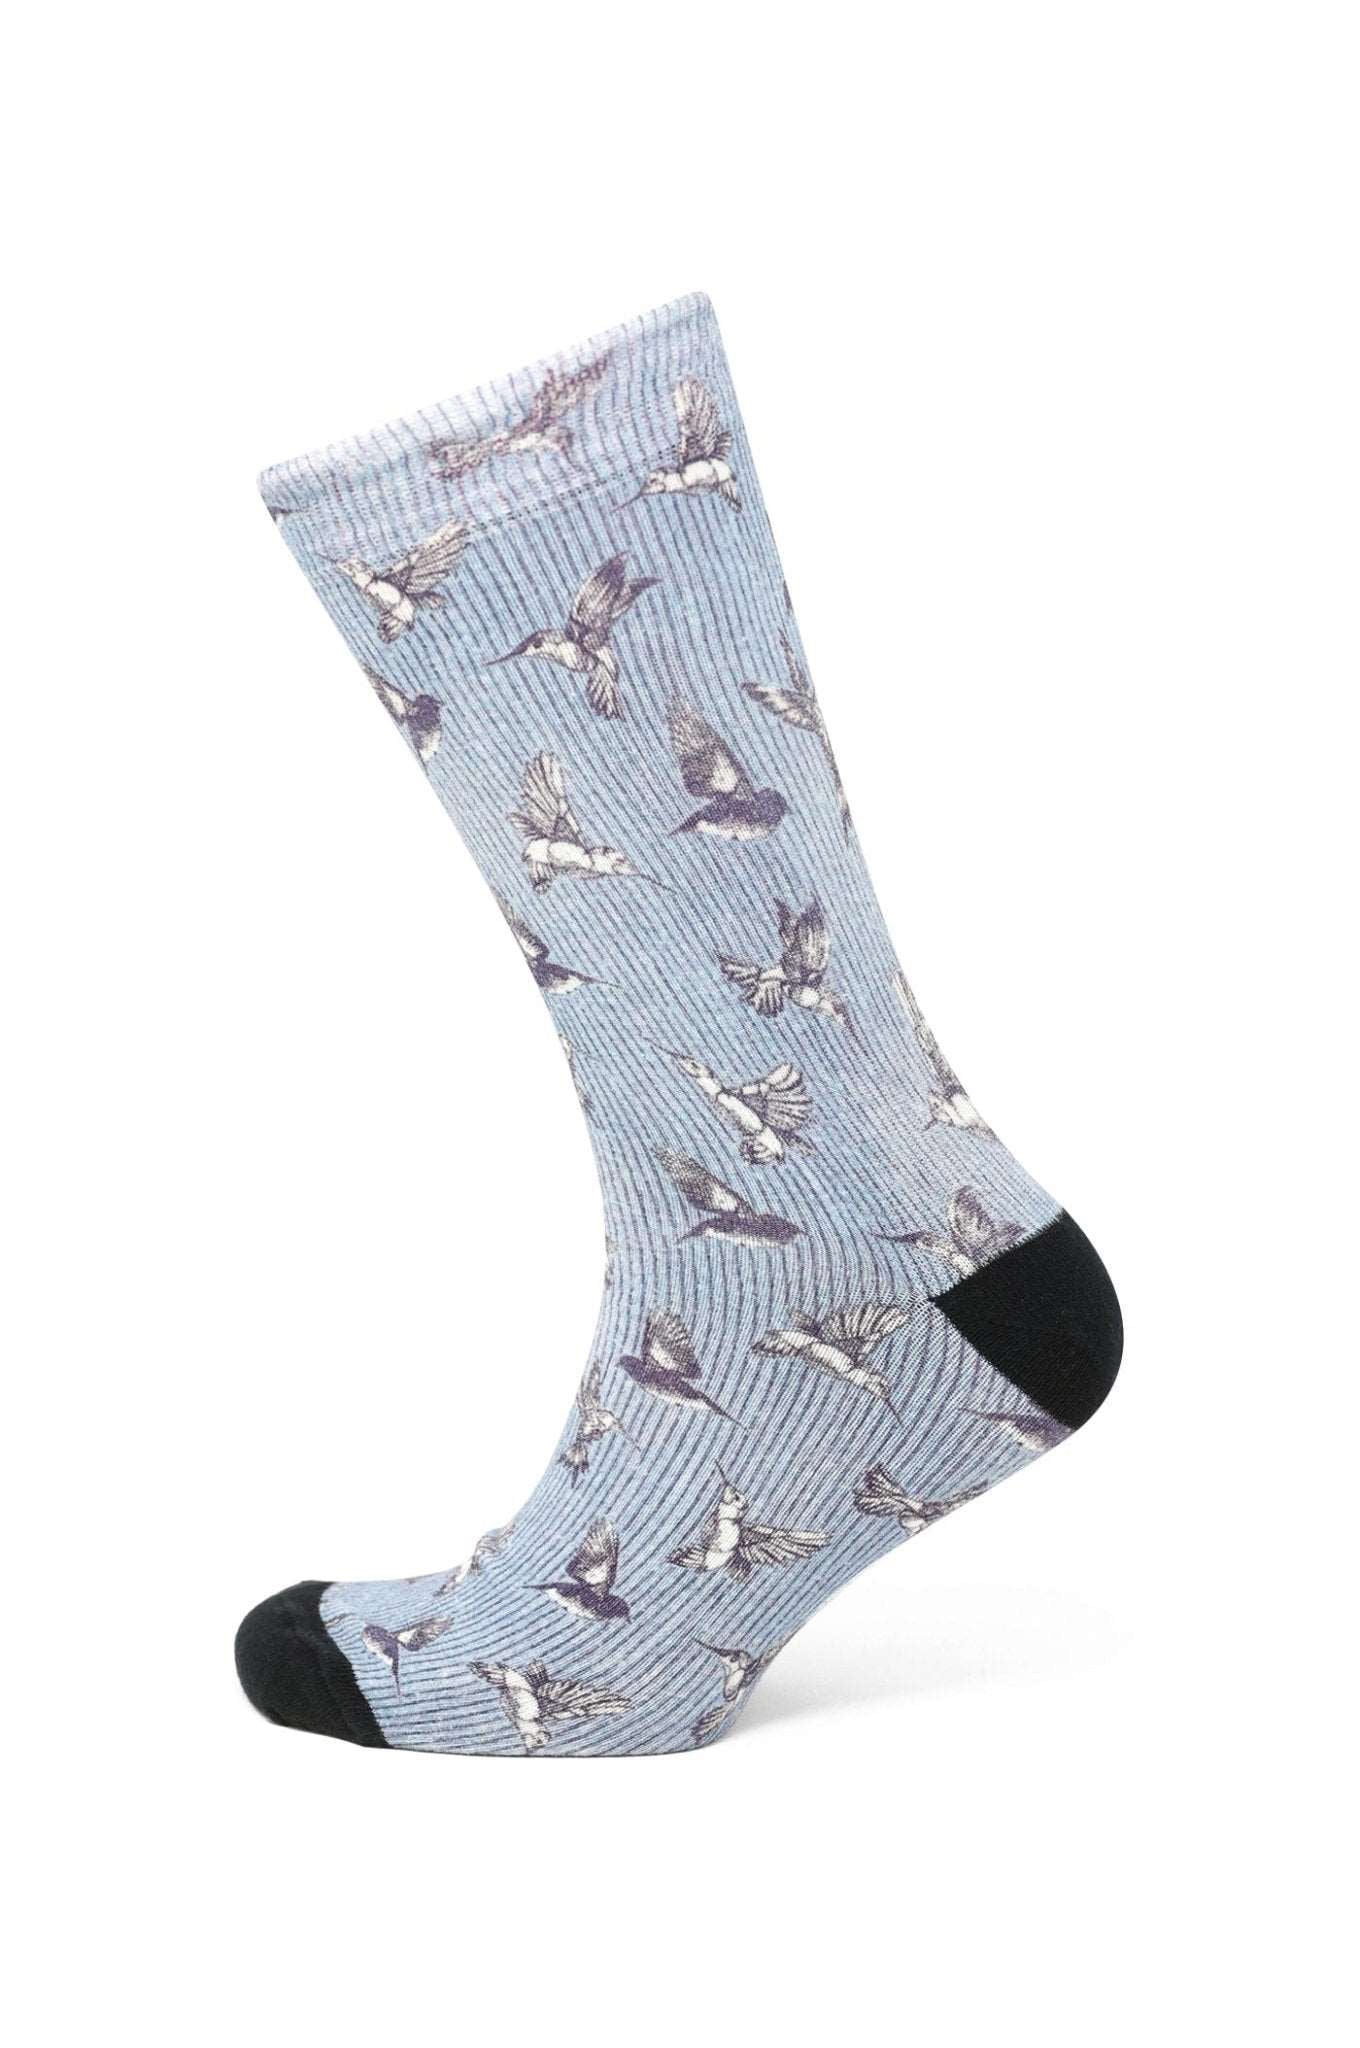 Modische Socke mit Kolibridesign - Blau - REAL GUYS